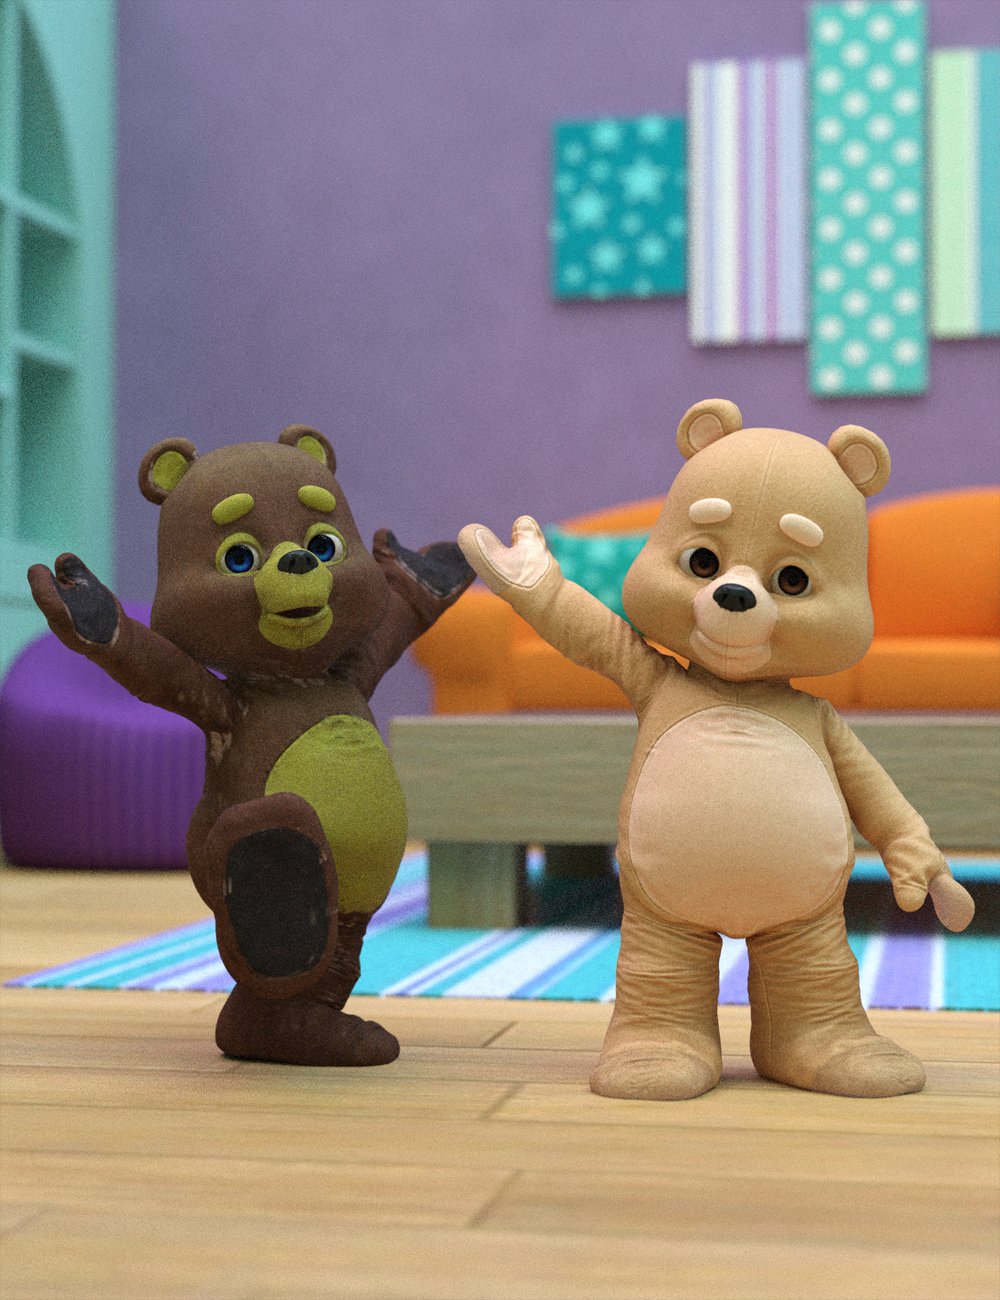 My Best Friend Teddy Poses for Teddy Bear | Daz 3D